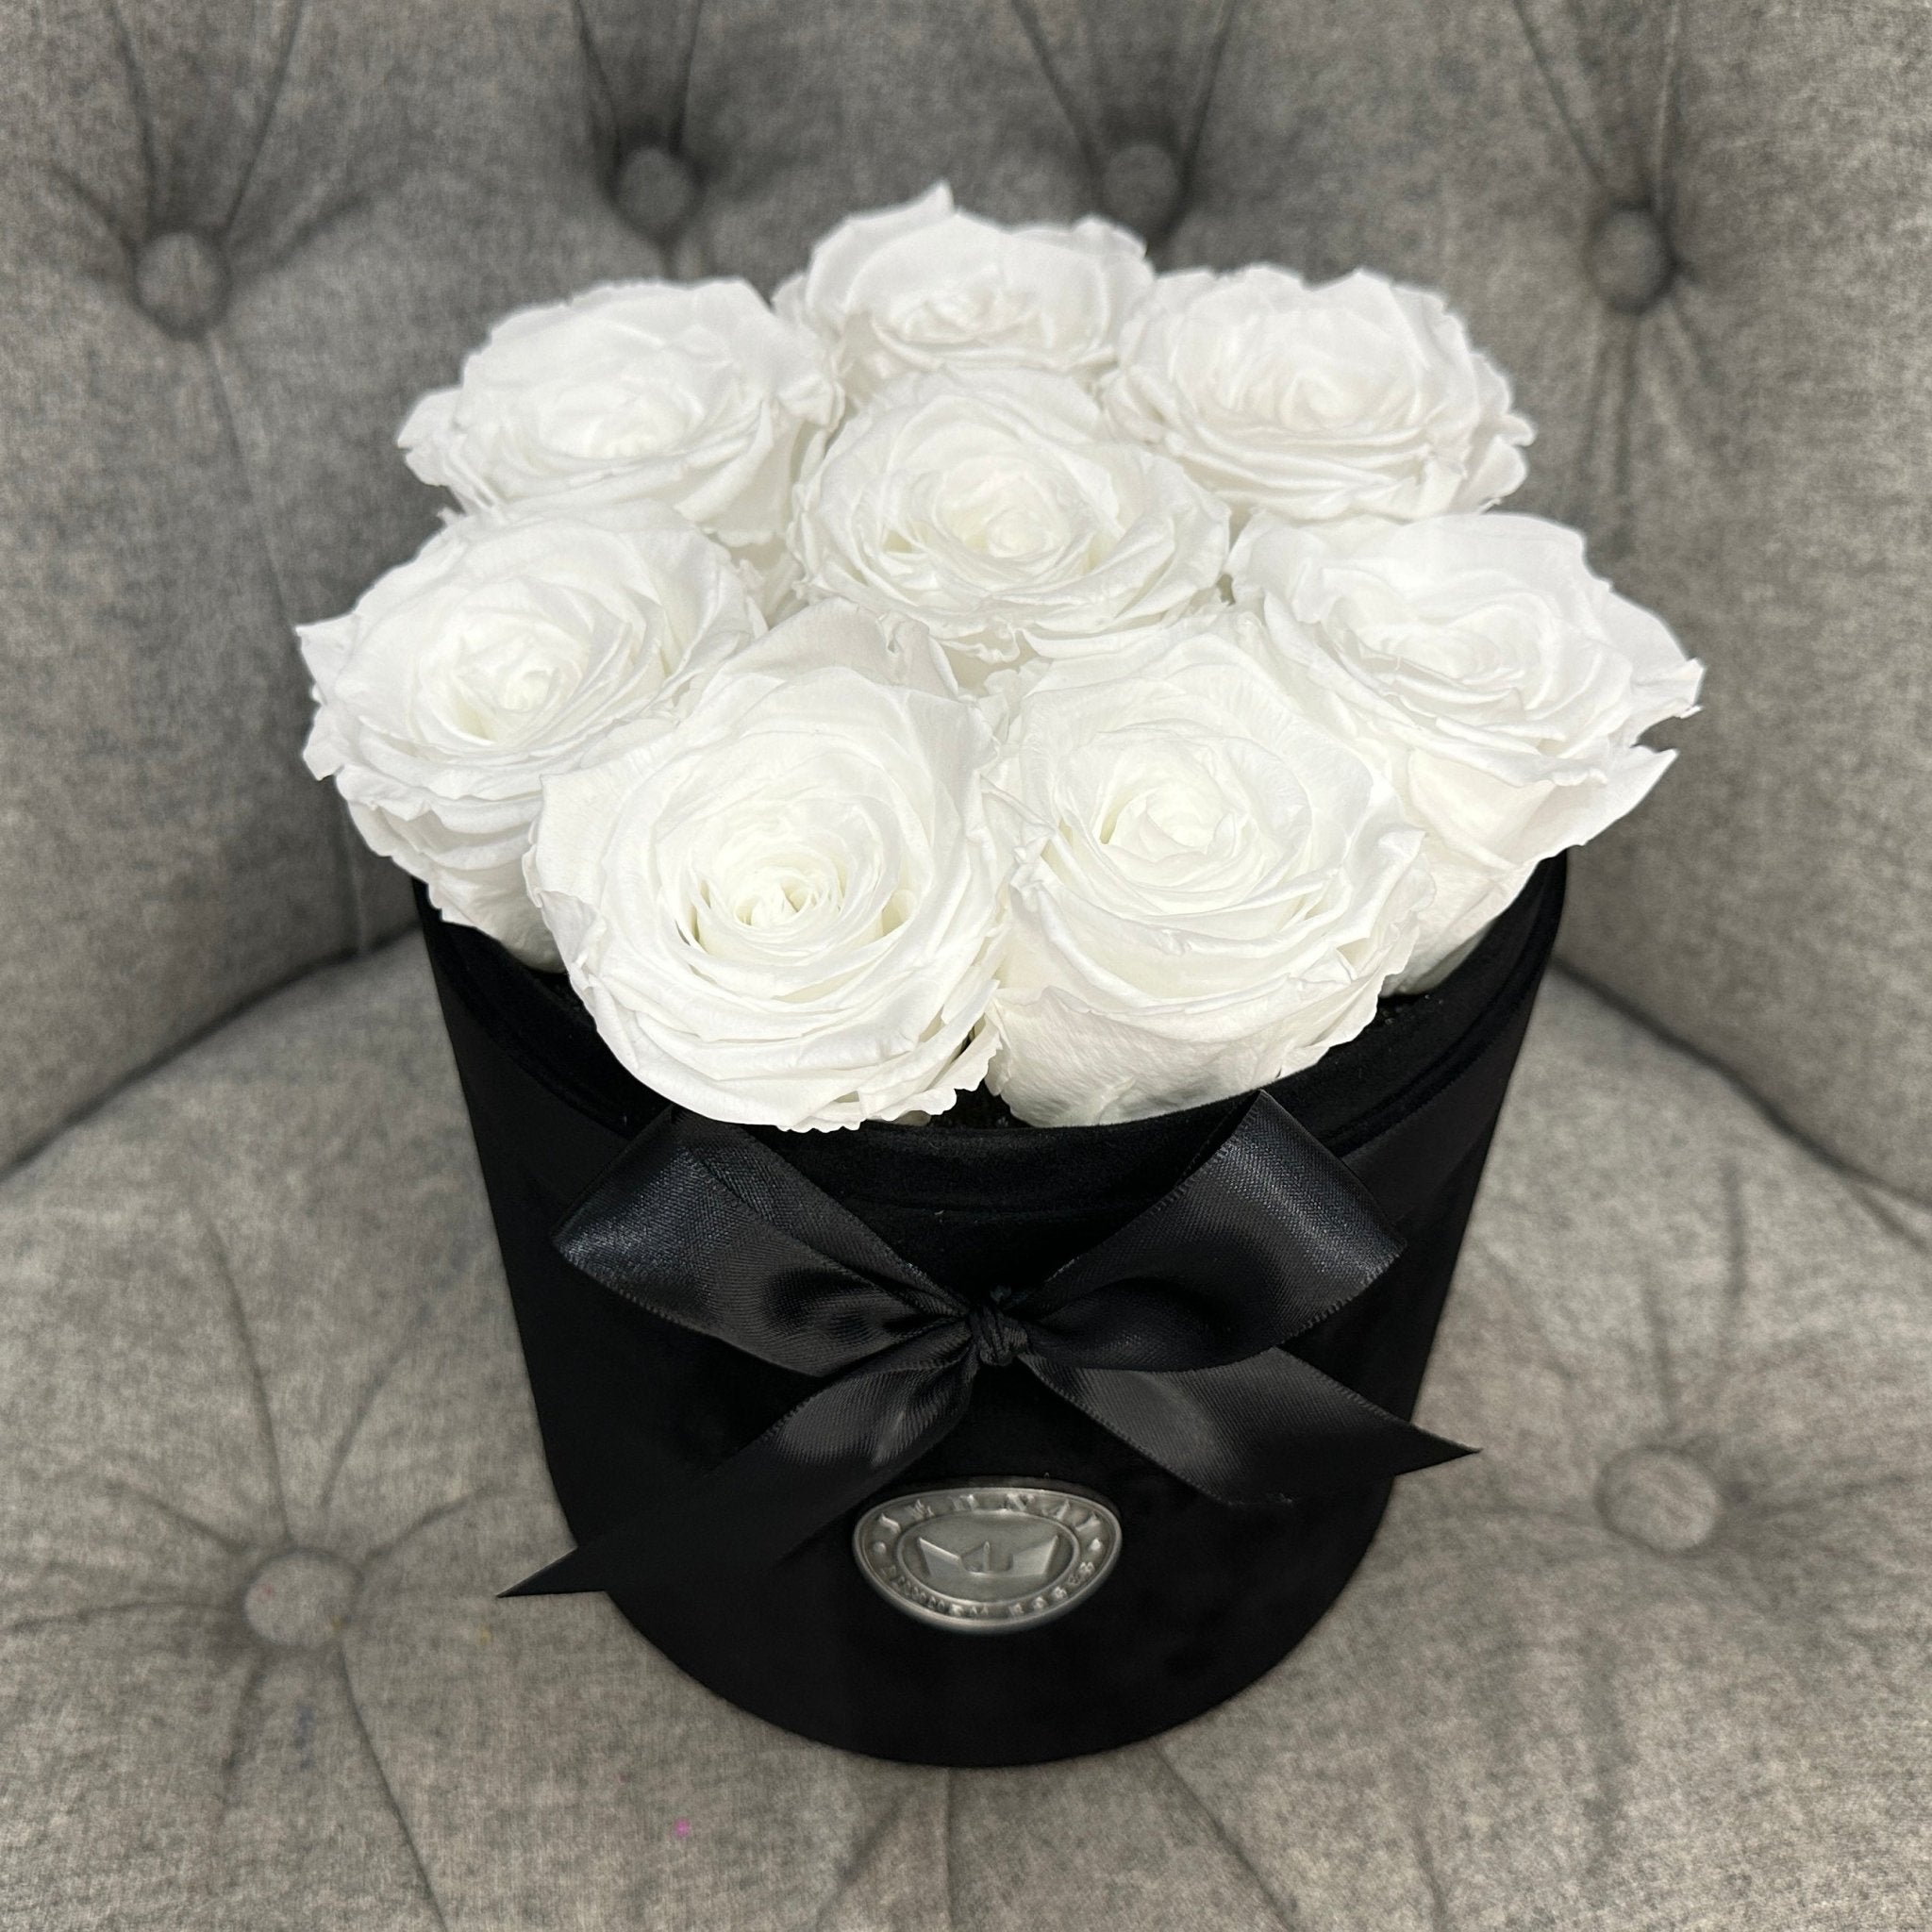 Medium Black Suede Forever Rose Box - Angel White Eternal Roses - Jednay Roses